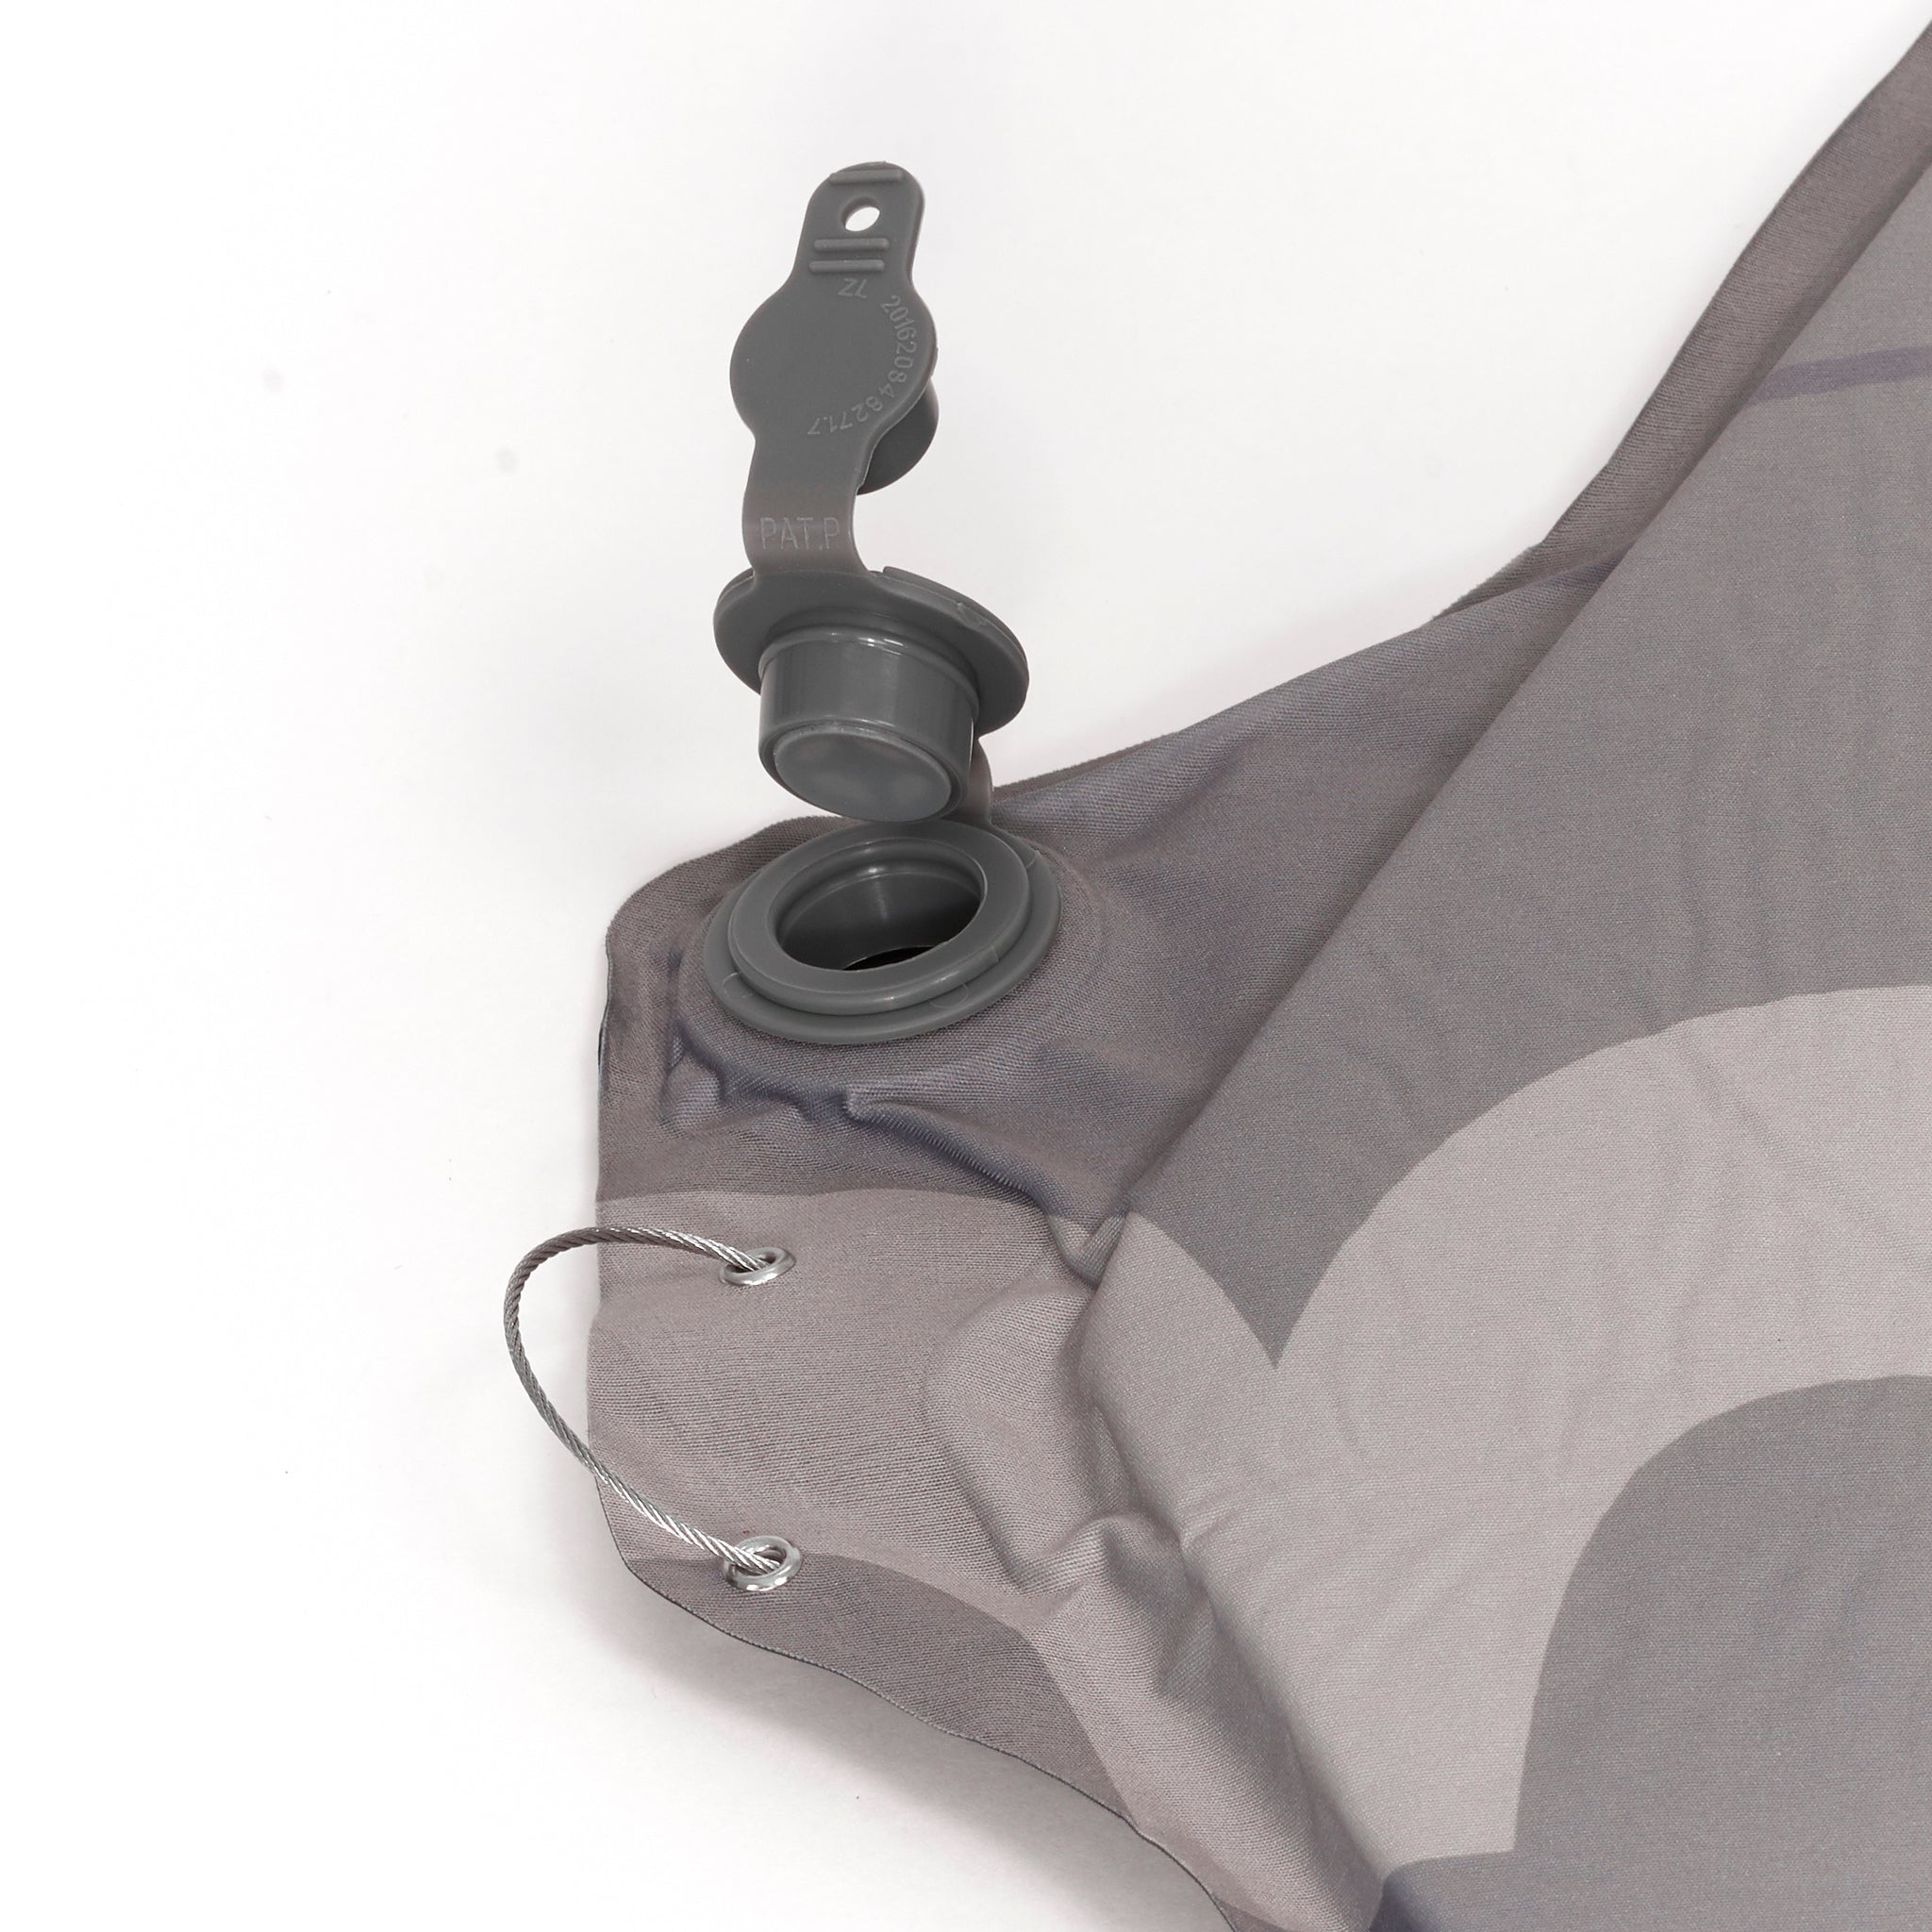 Veer Air Pad, Grey - ANB Baby -veer air mat